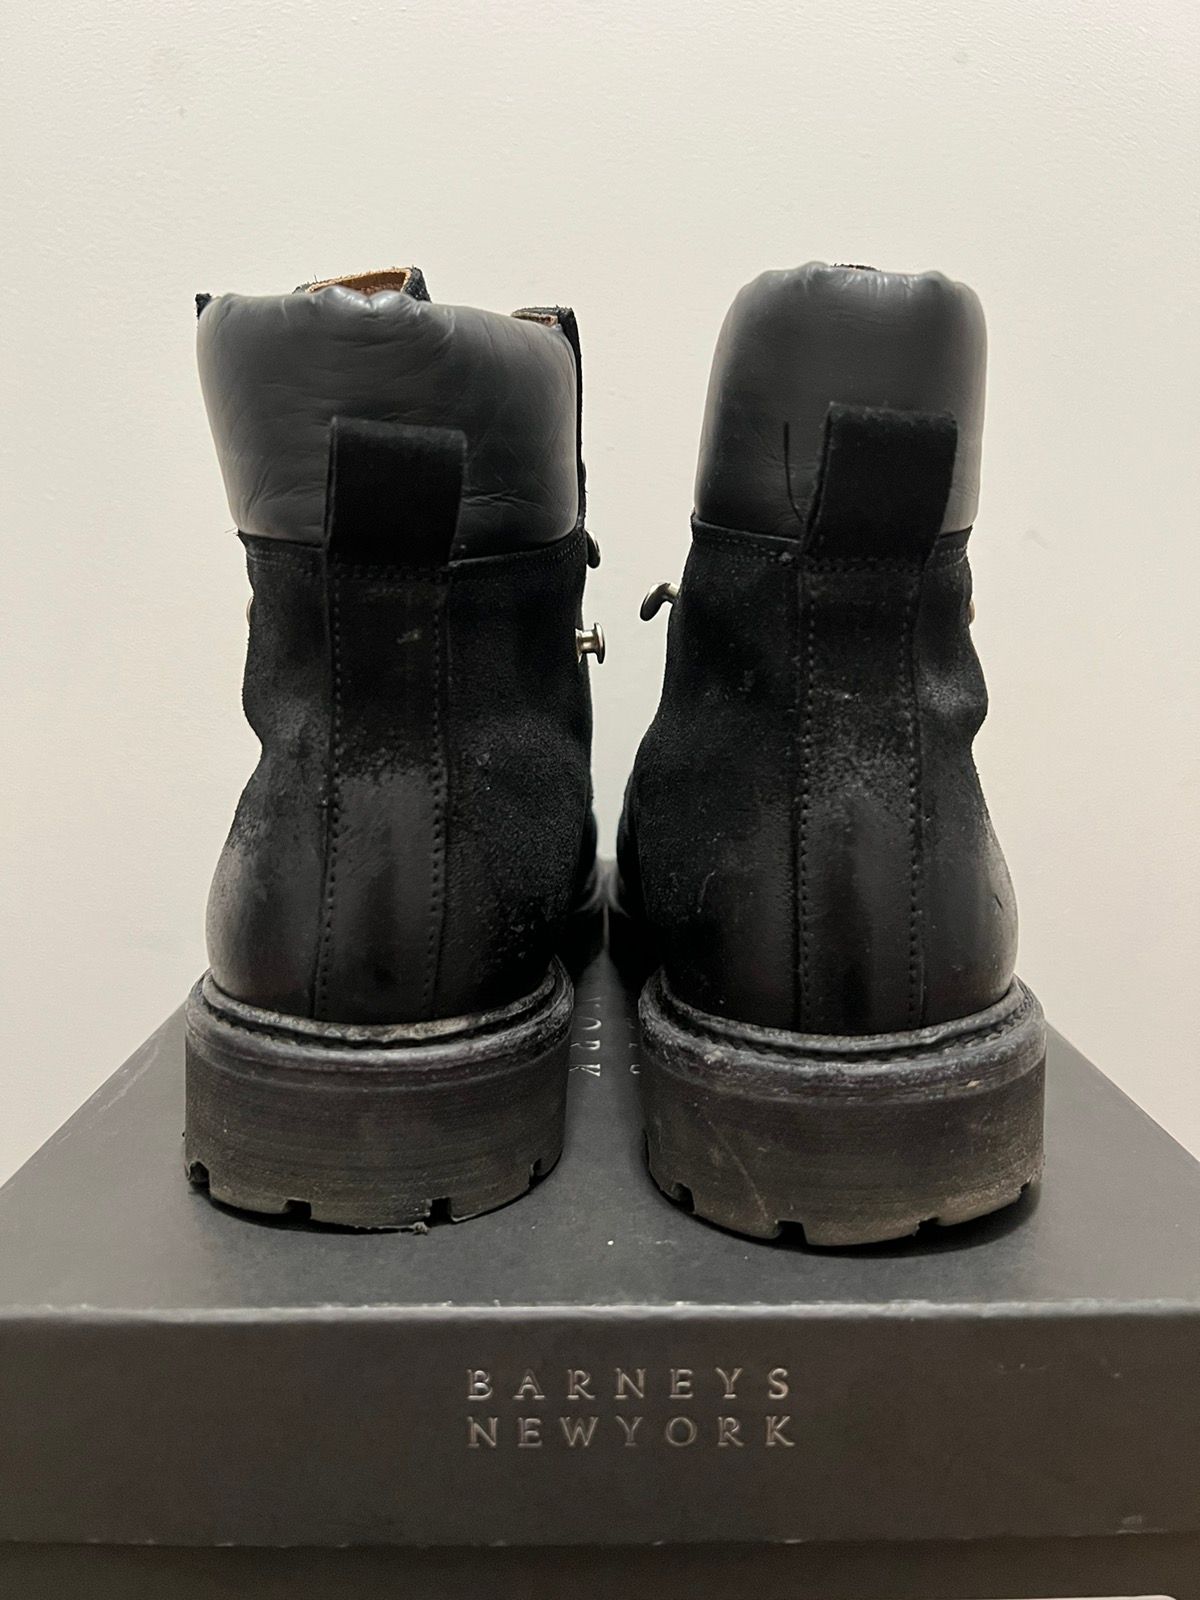 Barneys New York Vintage Barney’s New York Boots Size US 9.5 / EU 42-43 - 3 Thumbnail